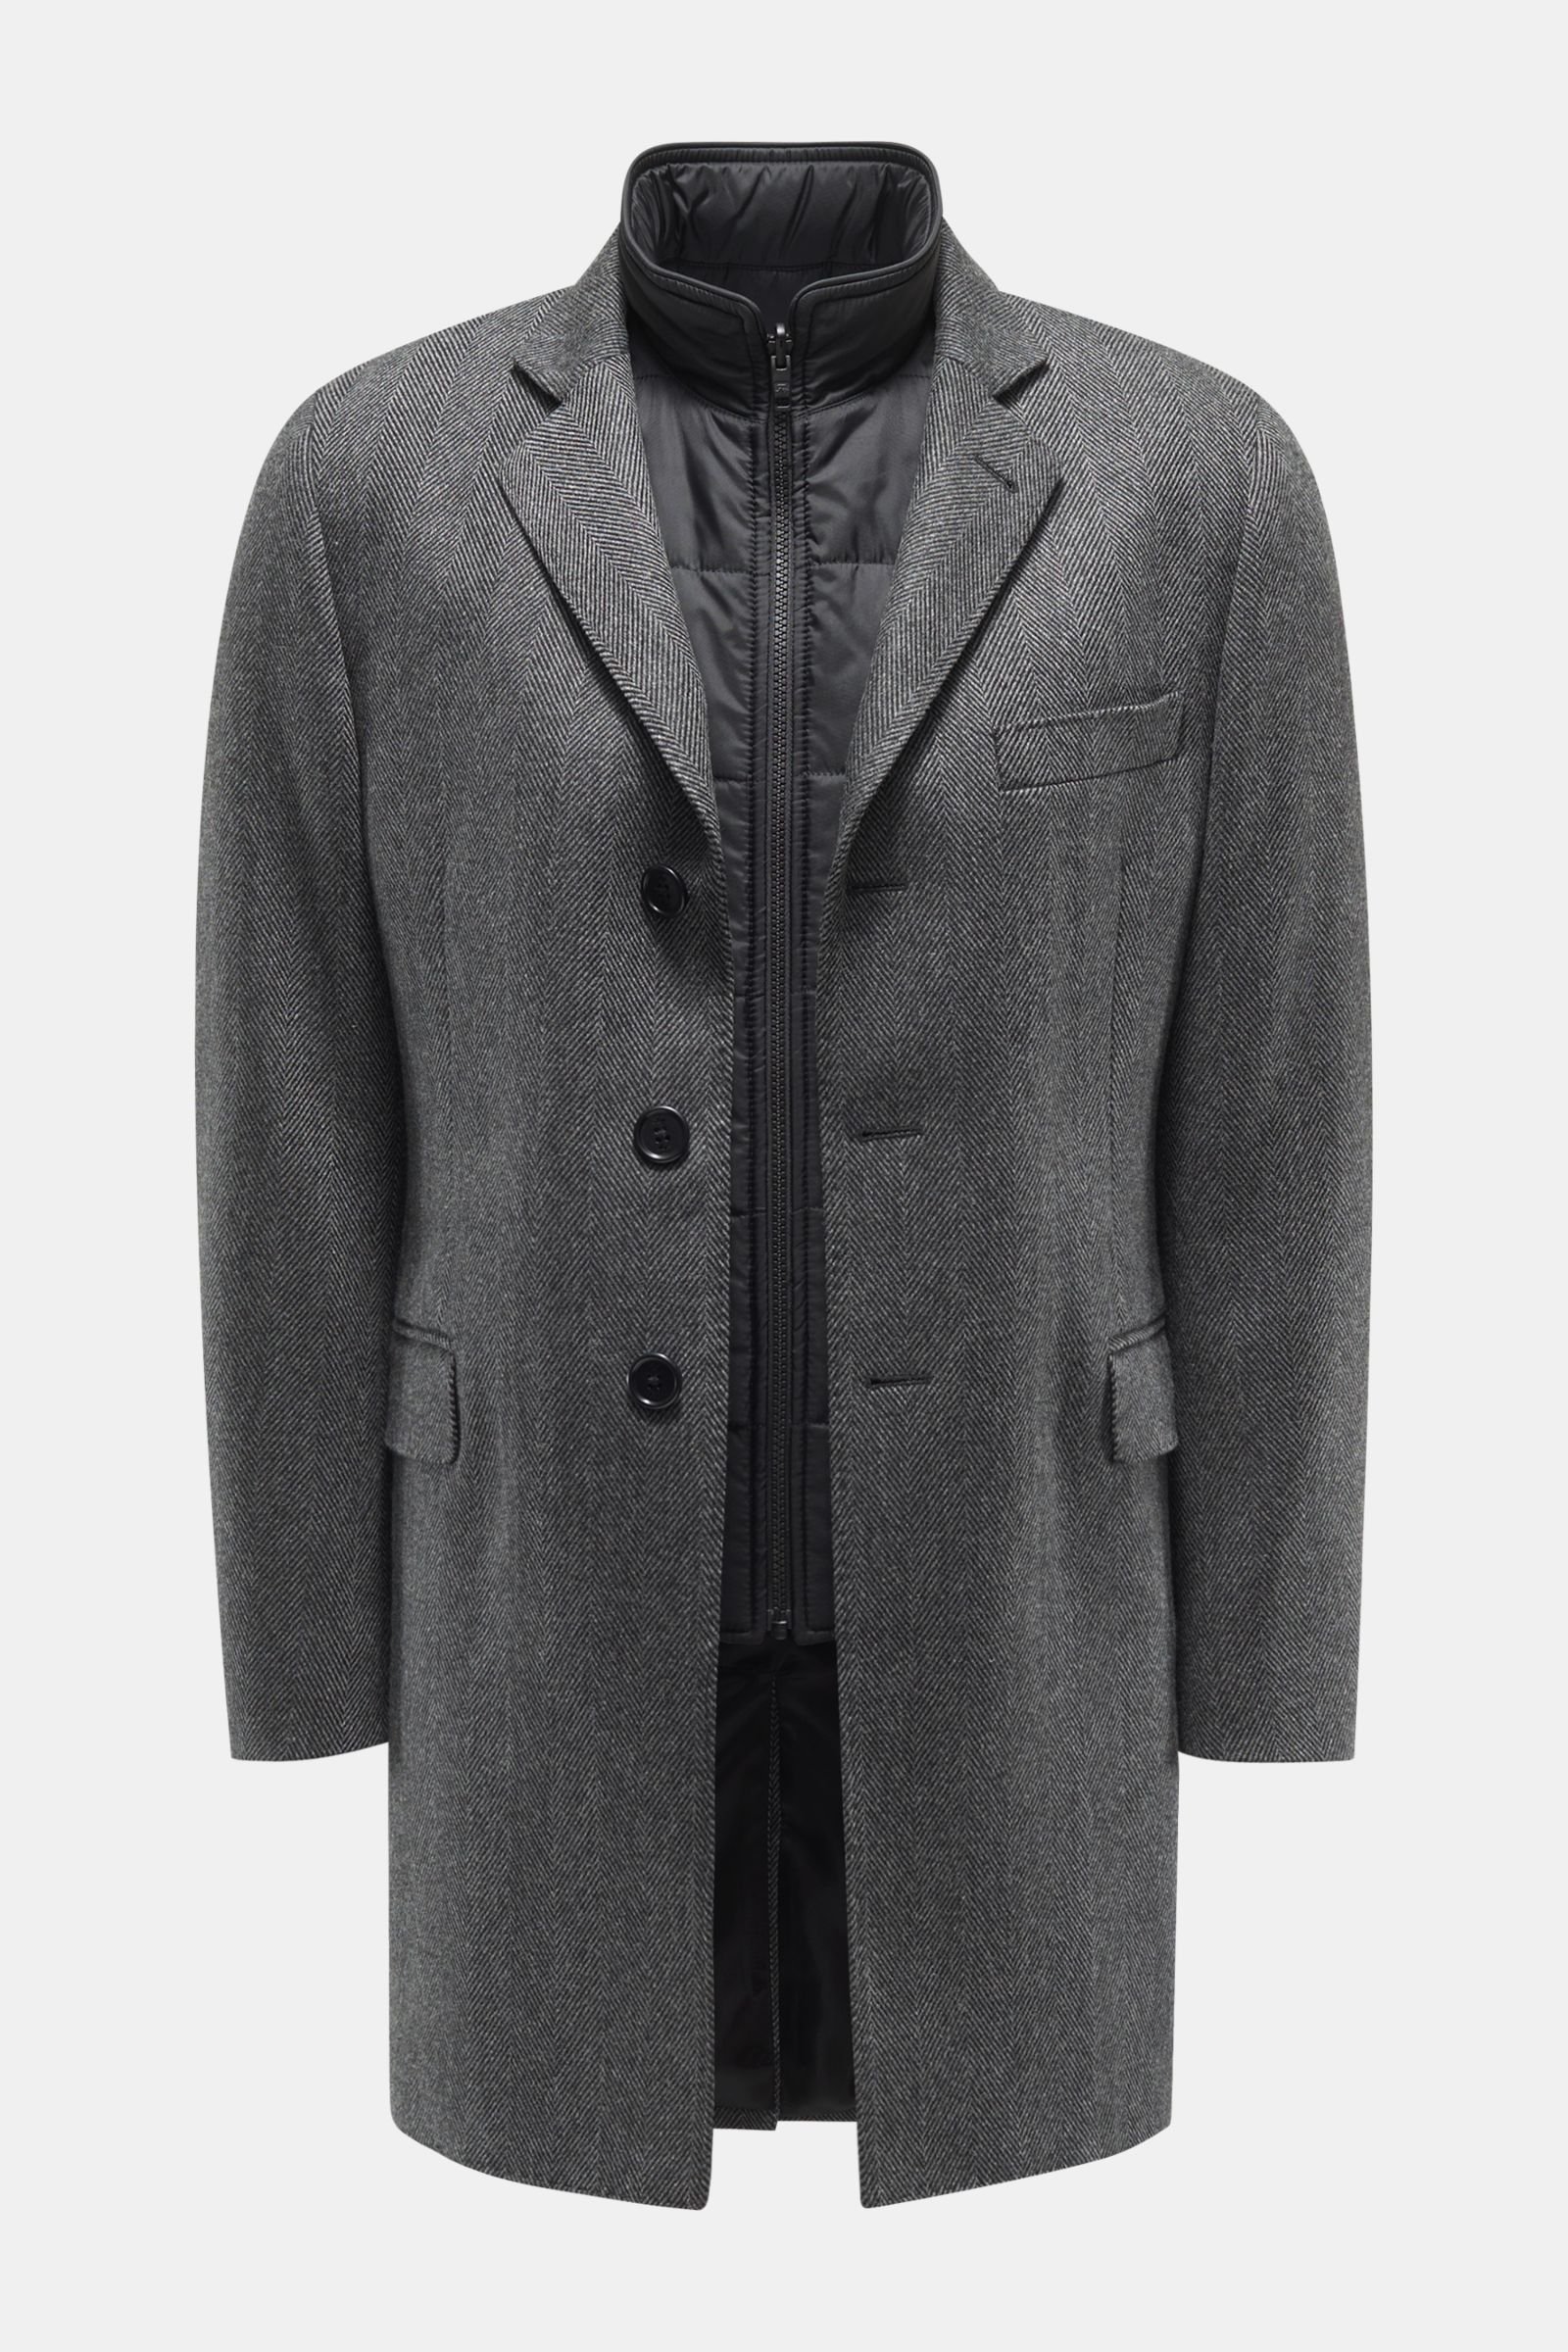 Coat dark grey/black patterned